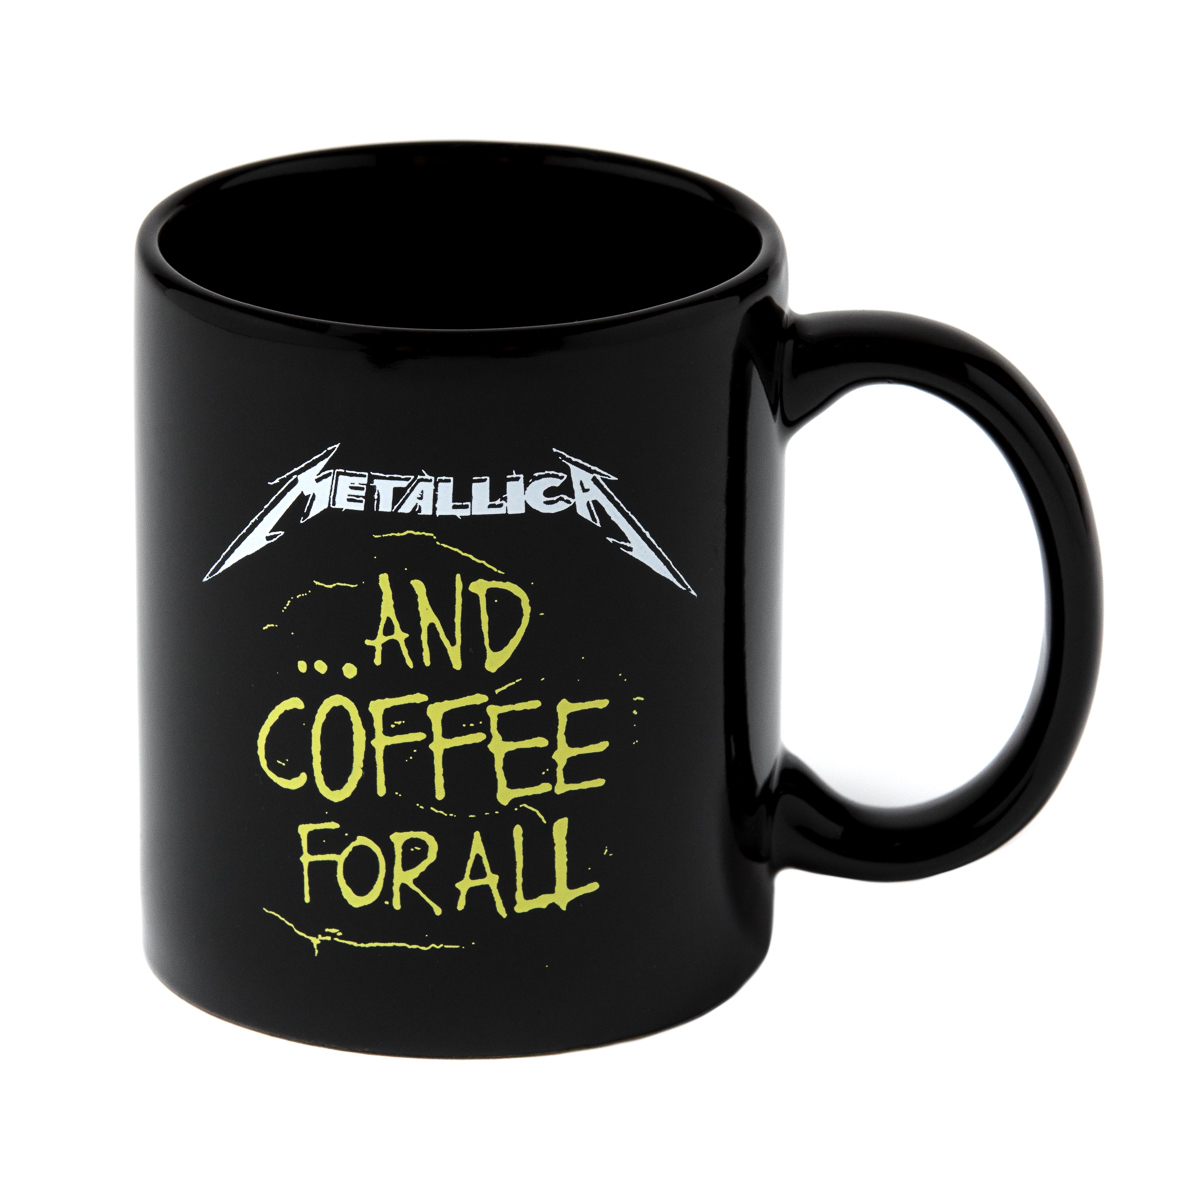 Metallica and coffee for all... Matt Black Mug